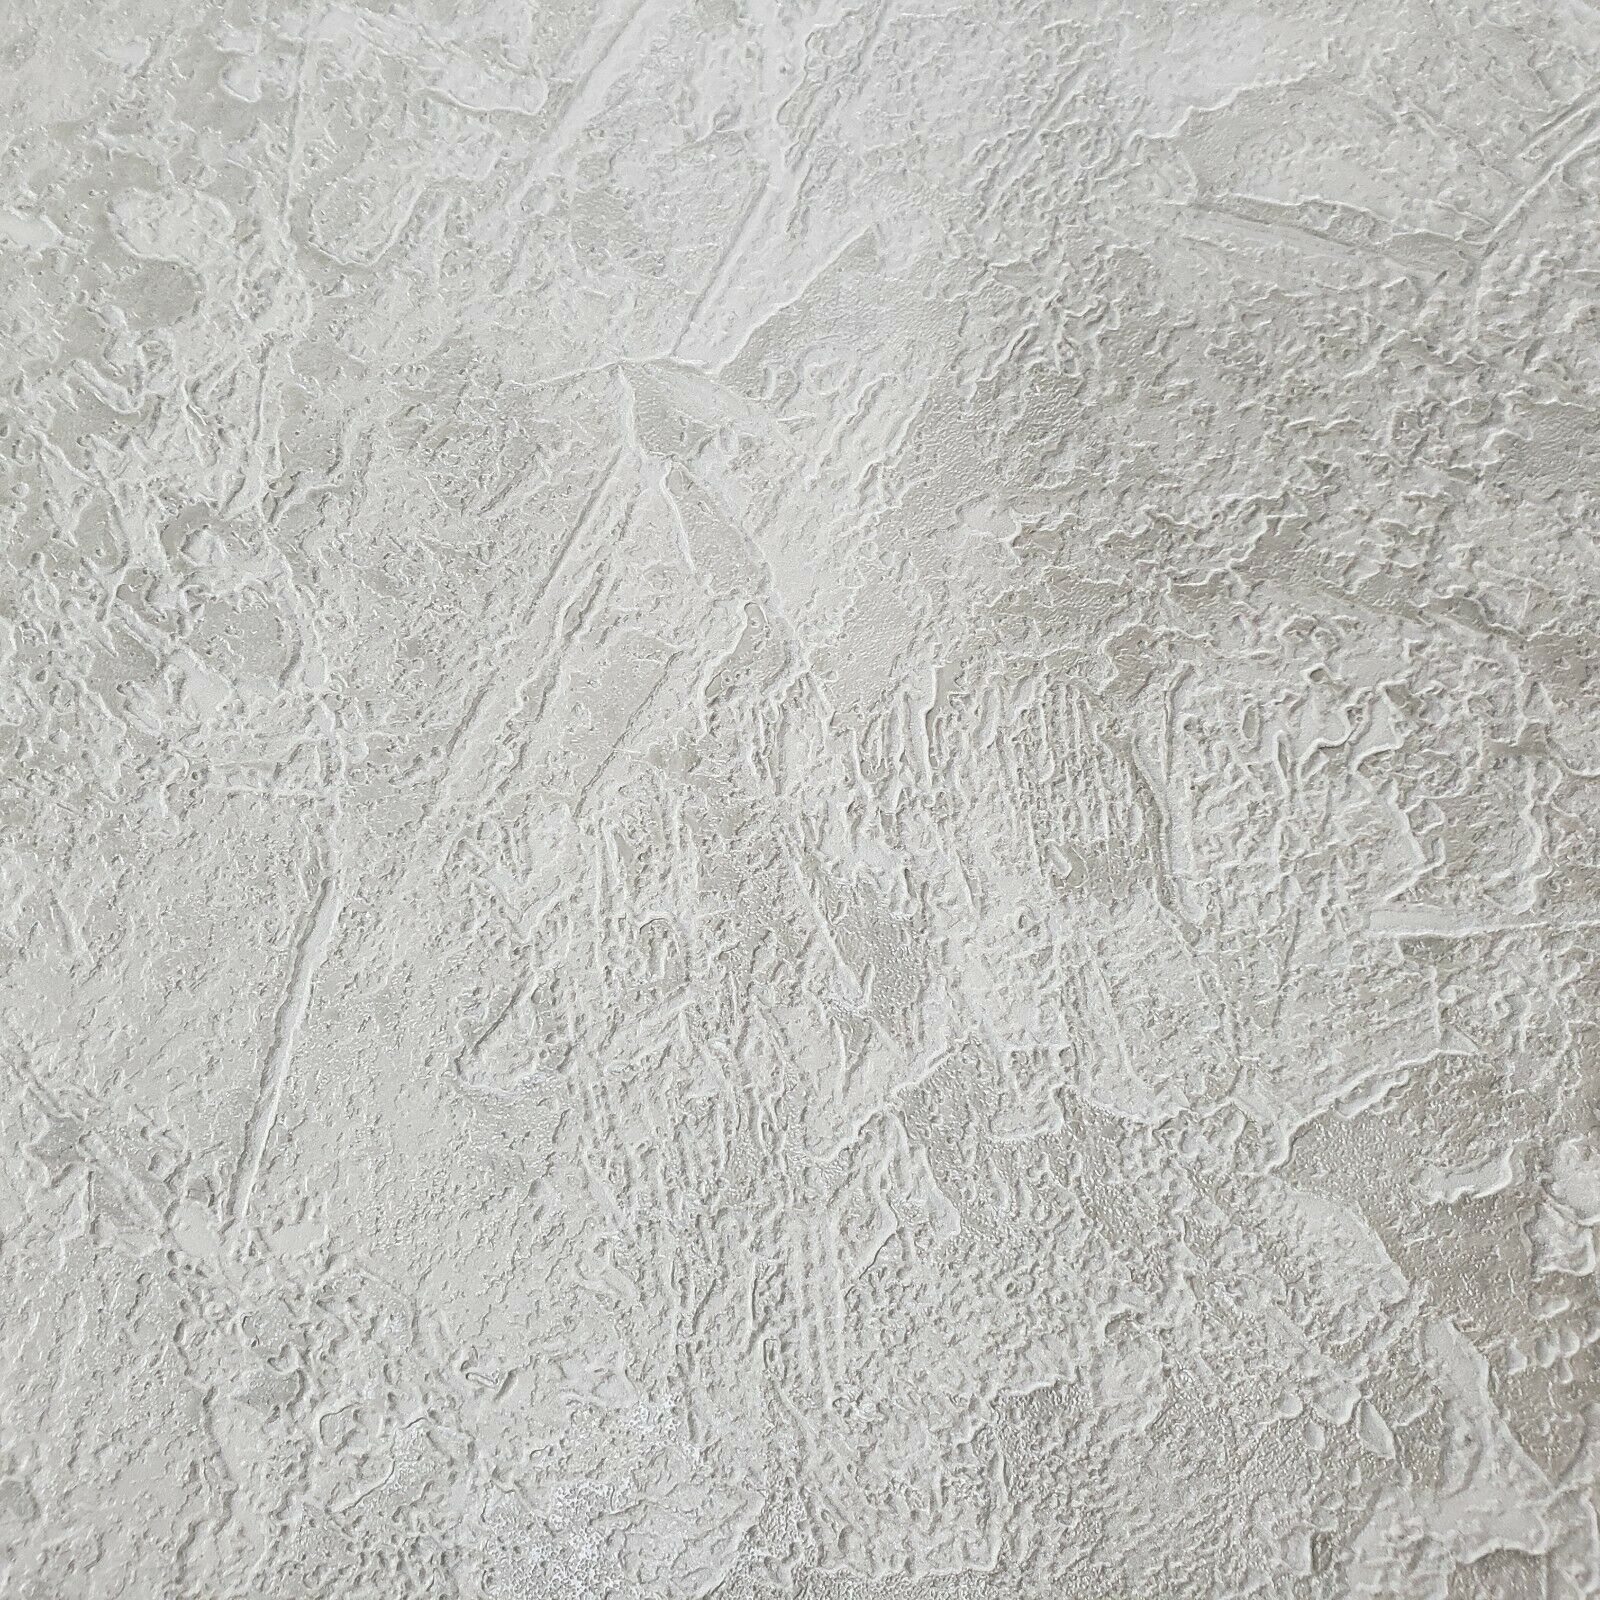 white plaster texture